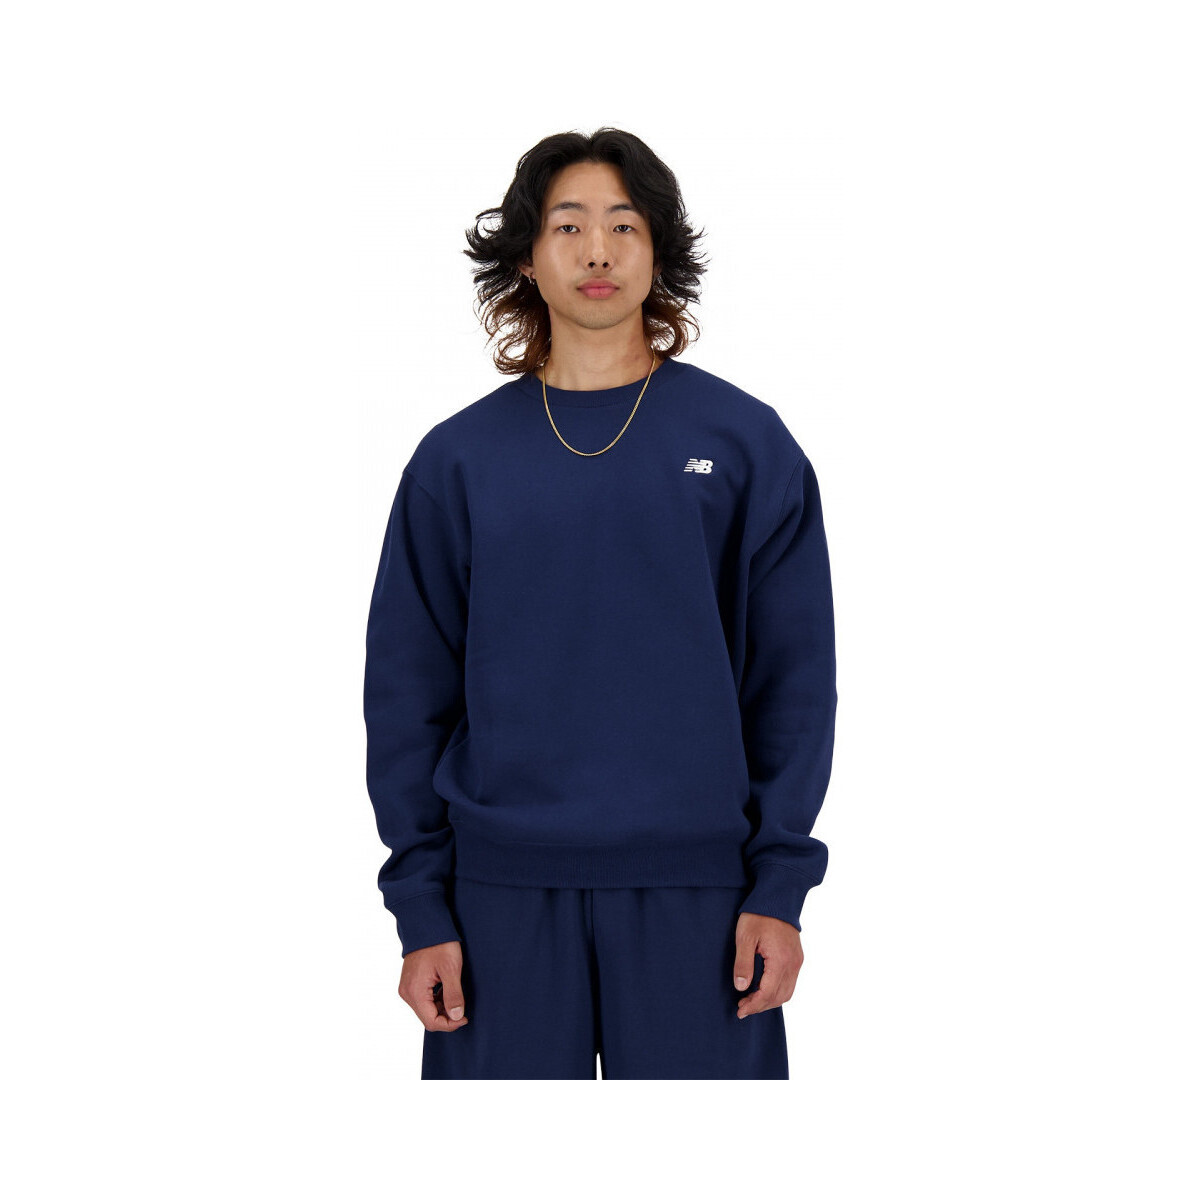 Kleidung Herren Sweatshirts New Balance Sport essentials fleece crew Blau